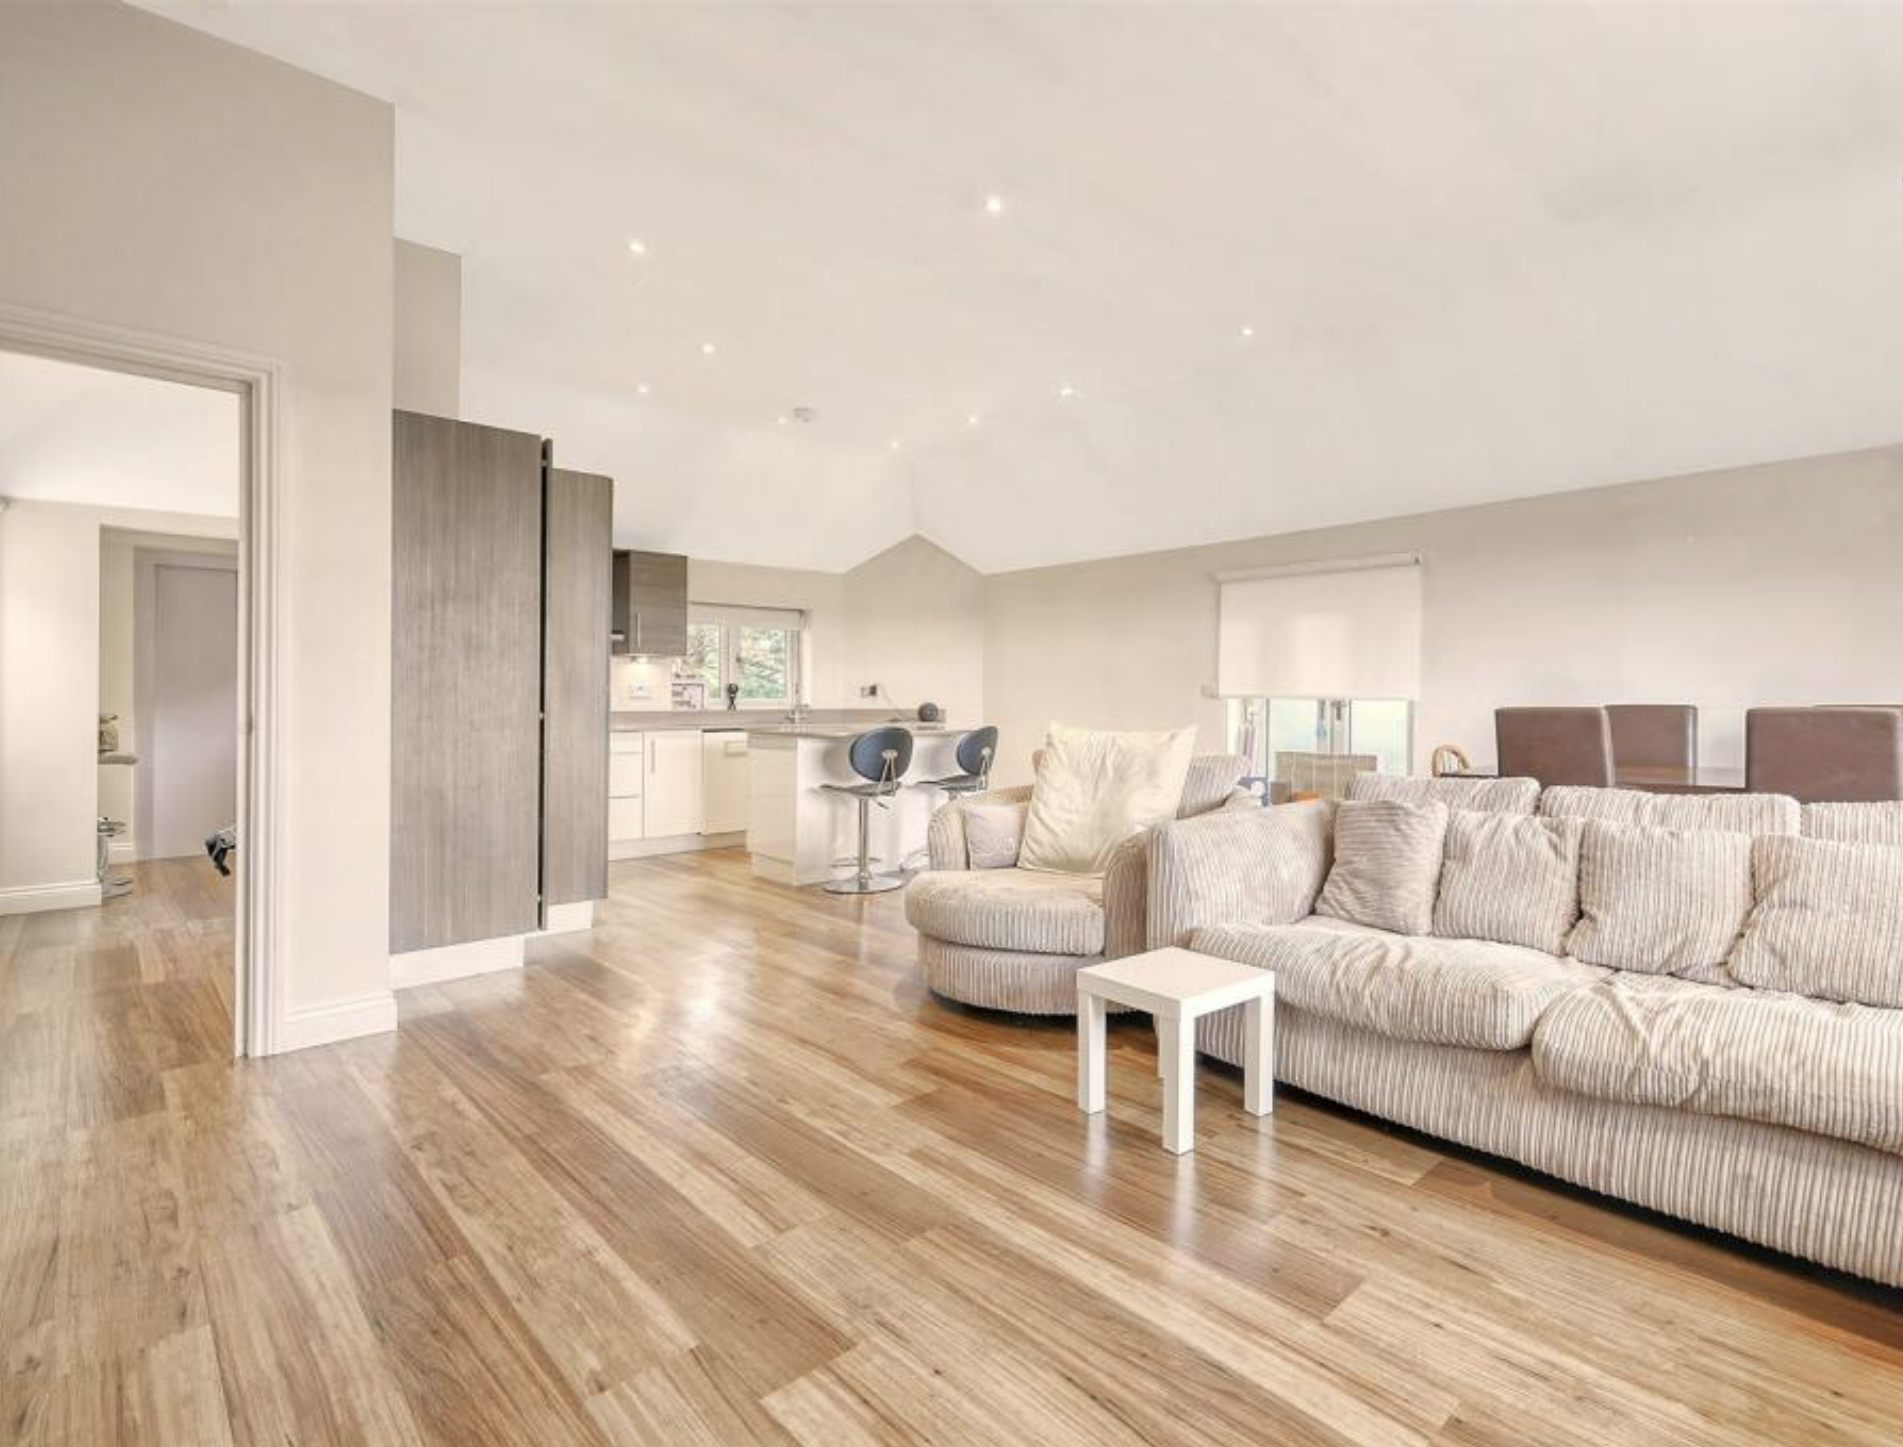 2 bed Apartment/Flat/Studio for rent in Loughton. From PropertyLoop